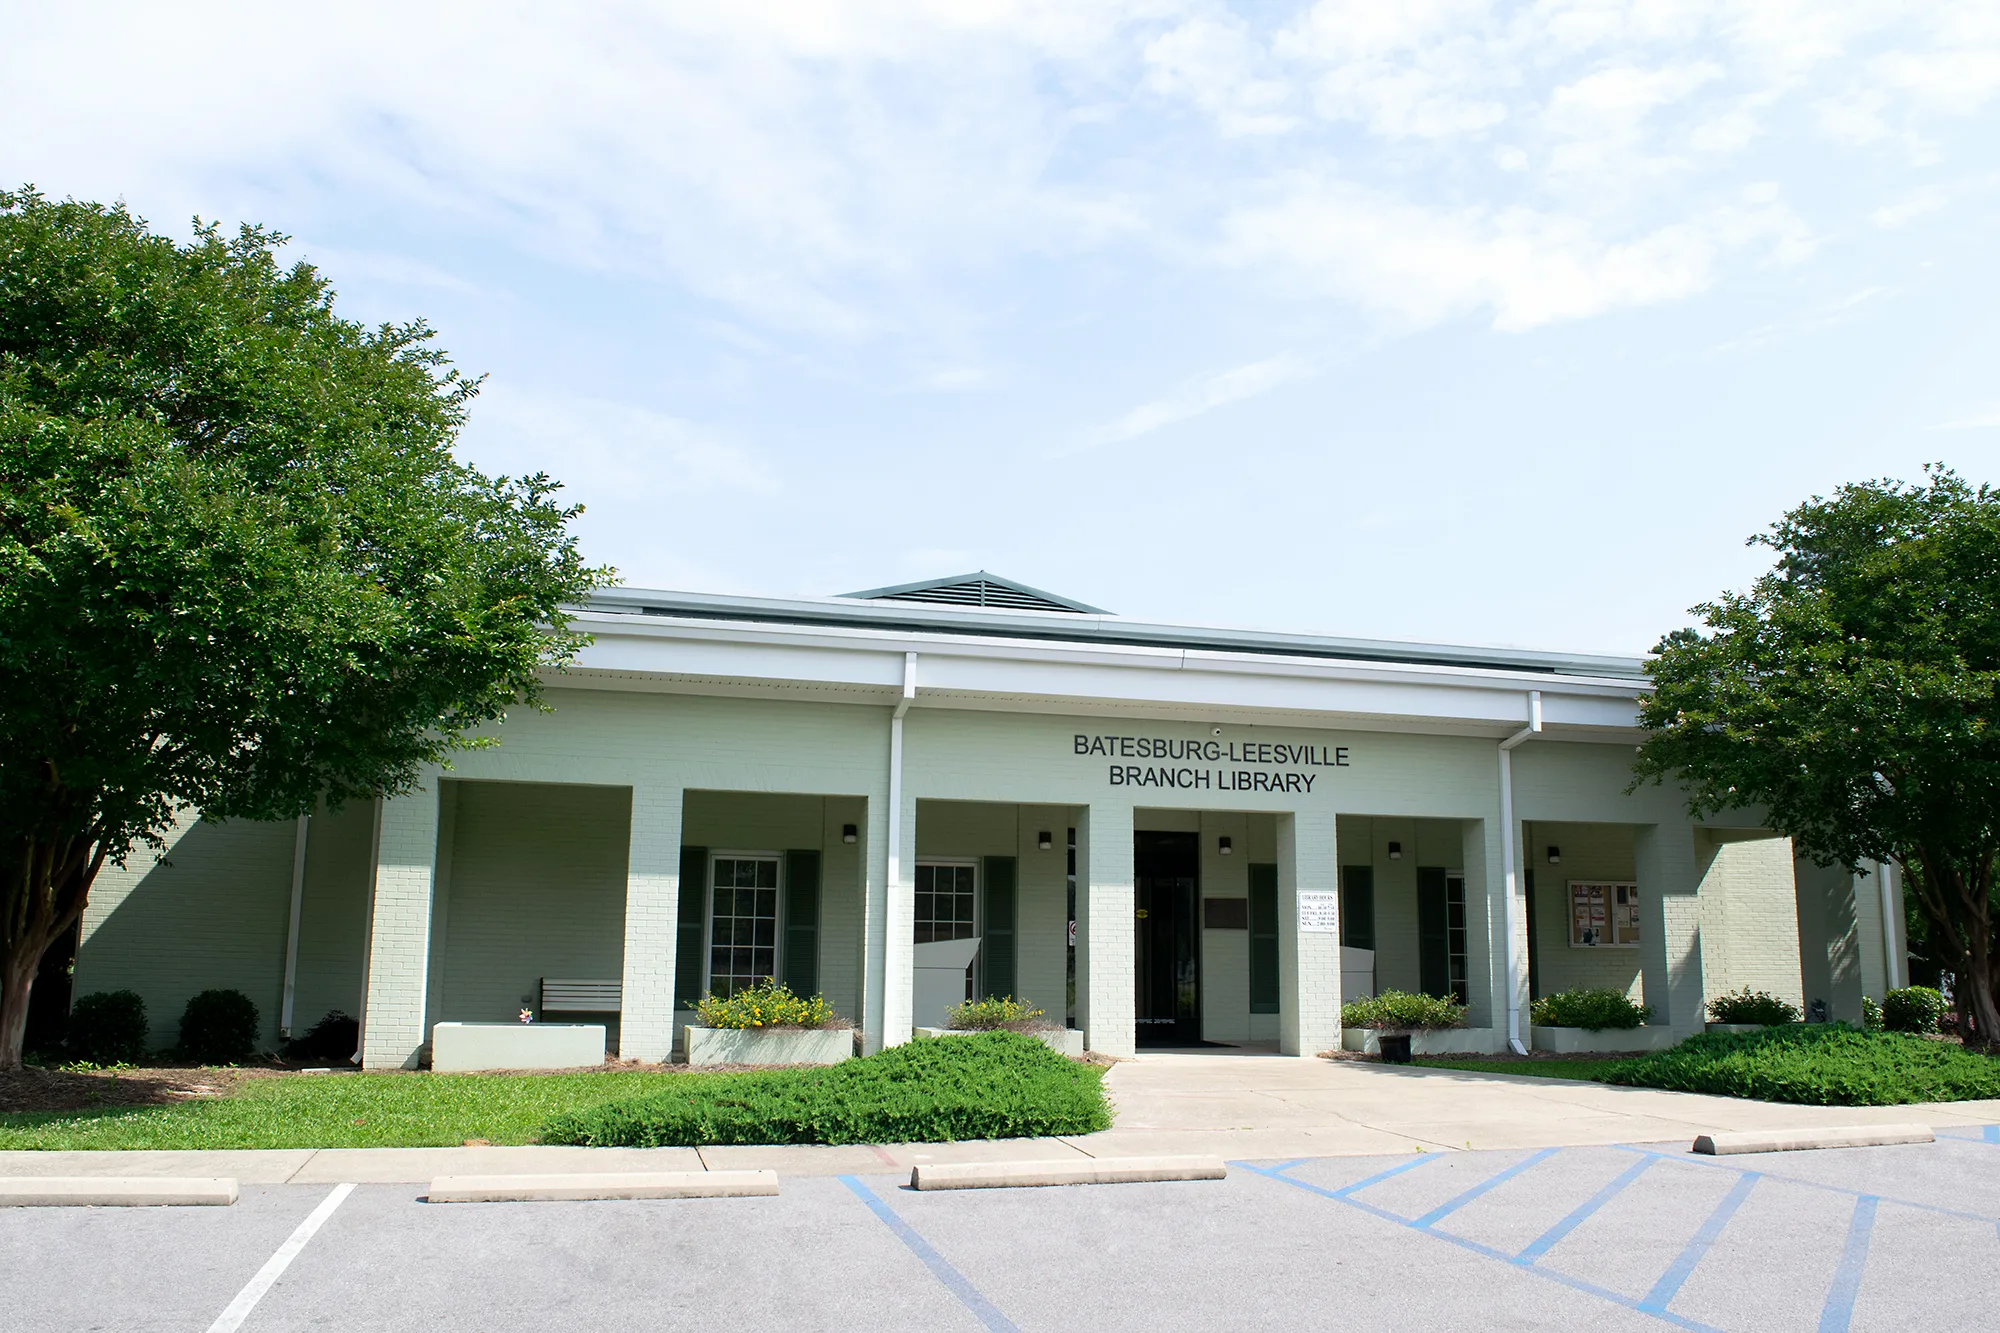 Batesburg-Leesville Branch Library (outside)